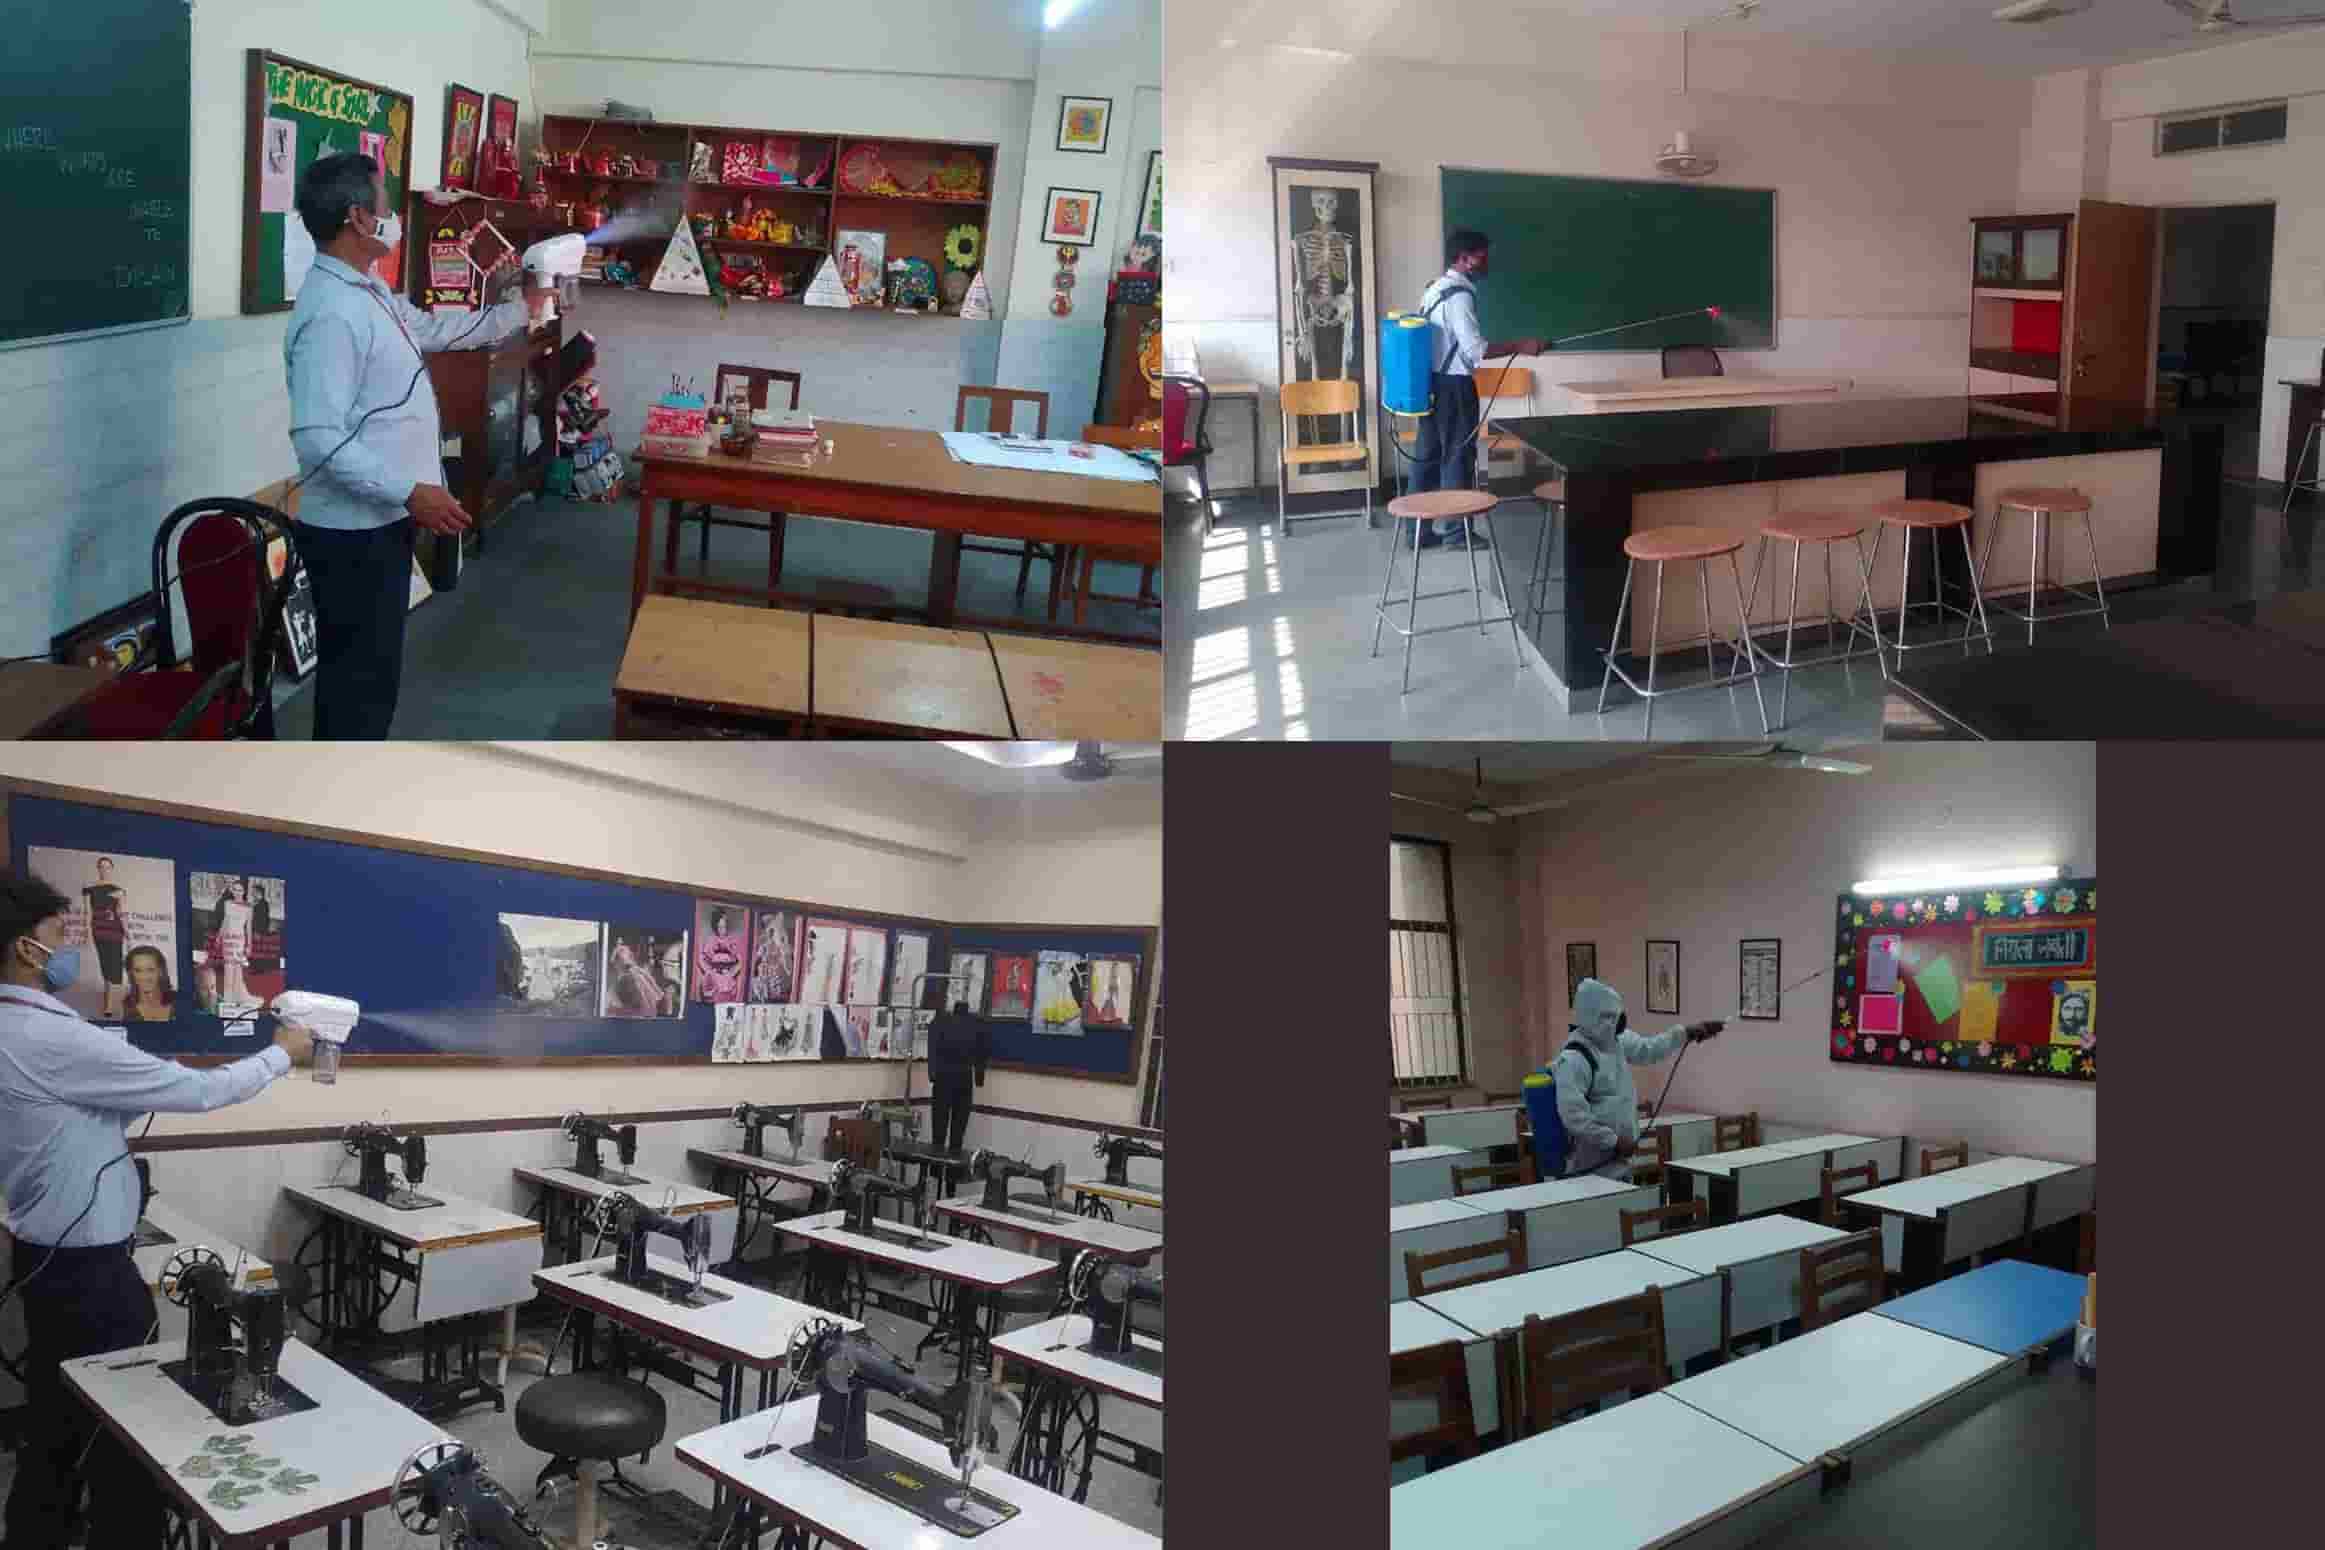 Sanitisation in the (clockwise from top left) Art room, Biology lab, language room and fashion studies room at Mahadevi Birla World Academy.